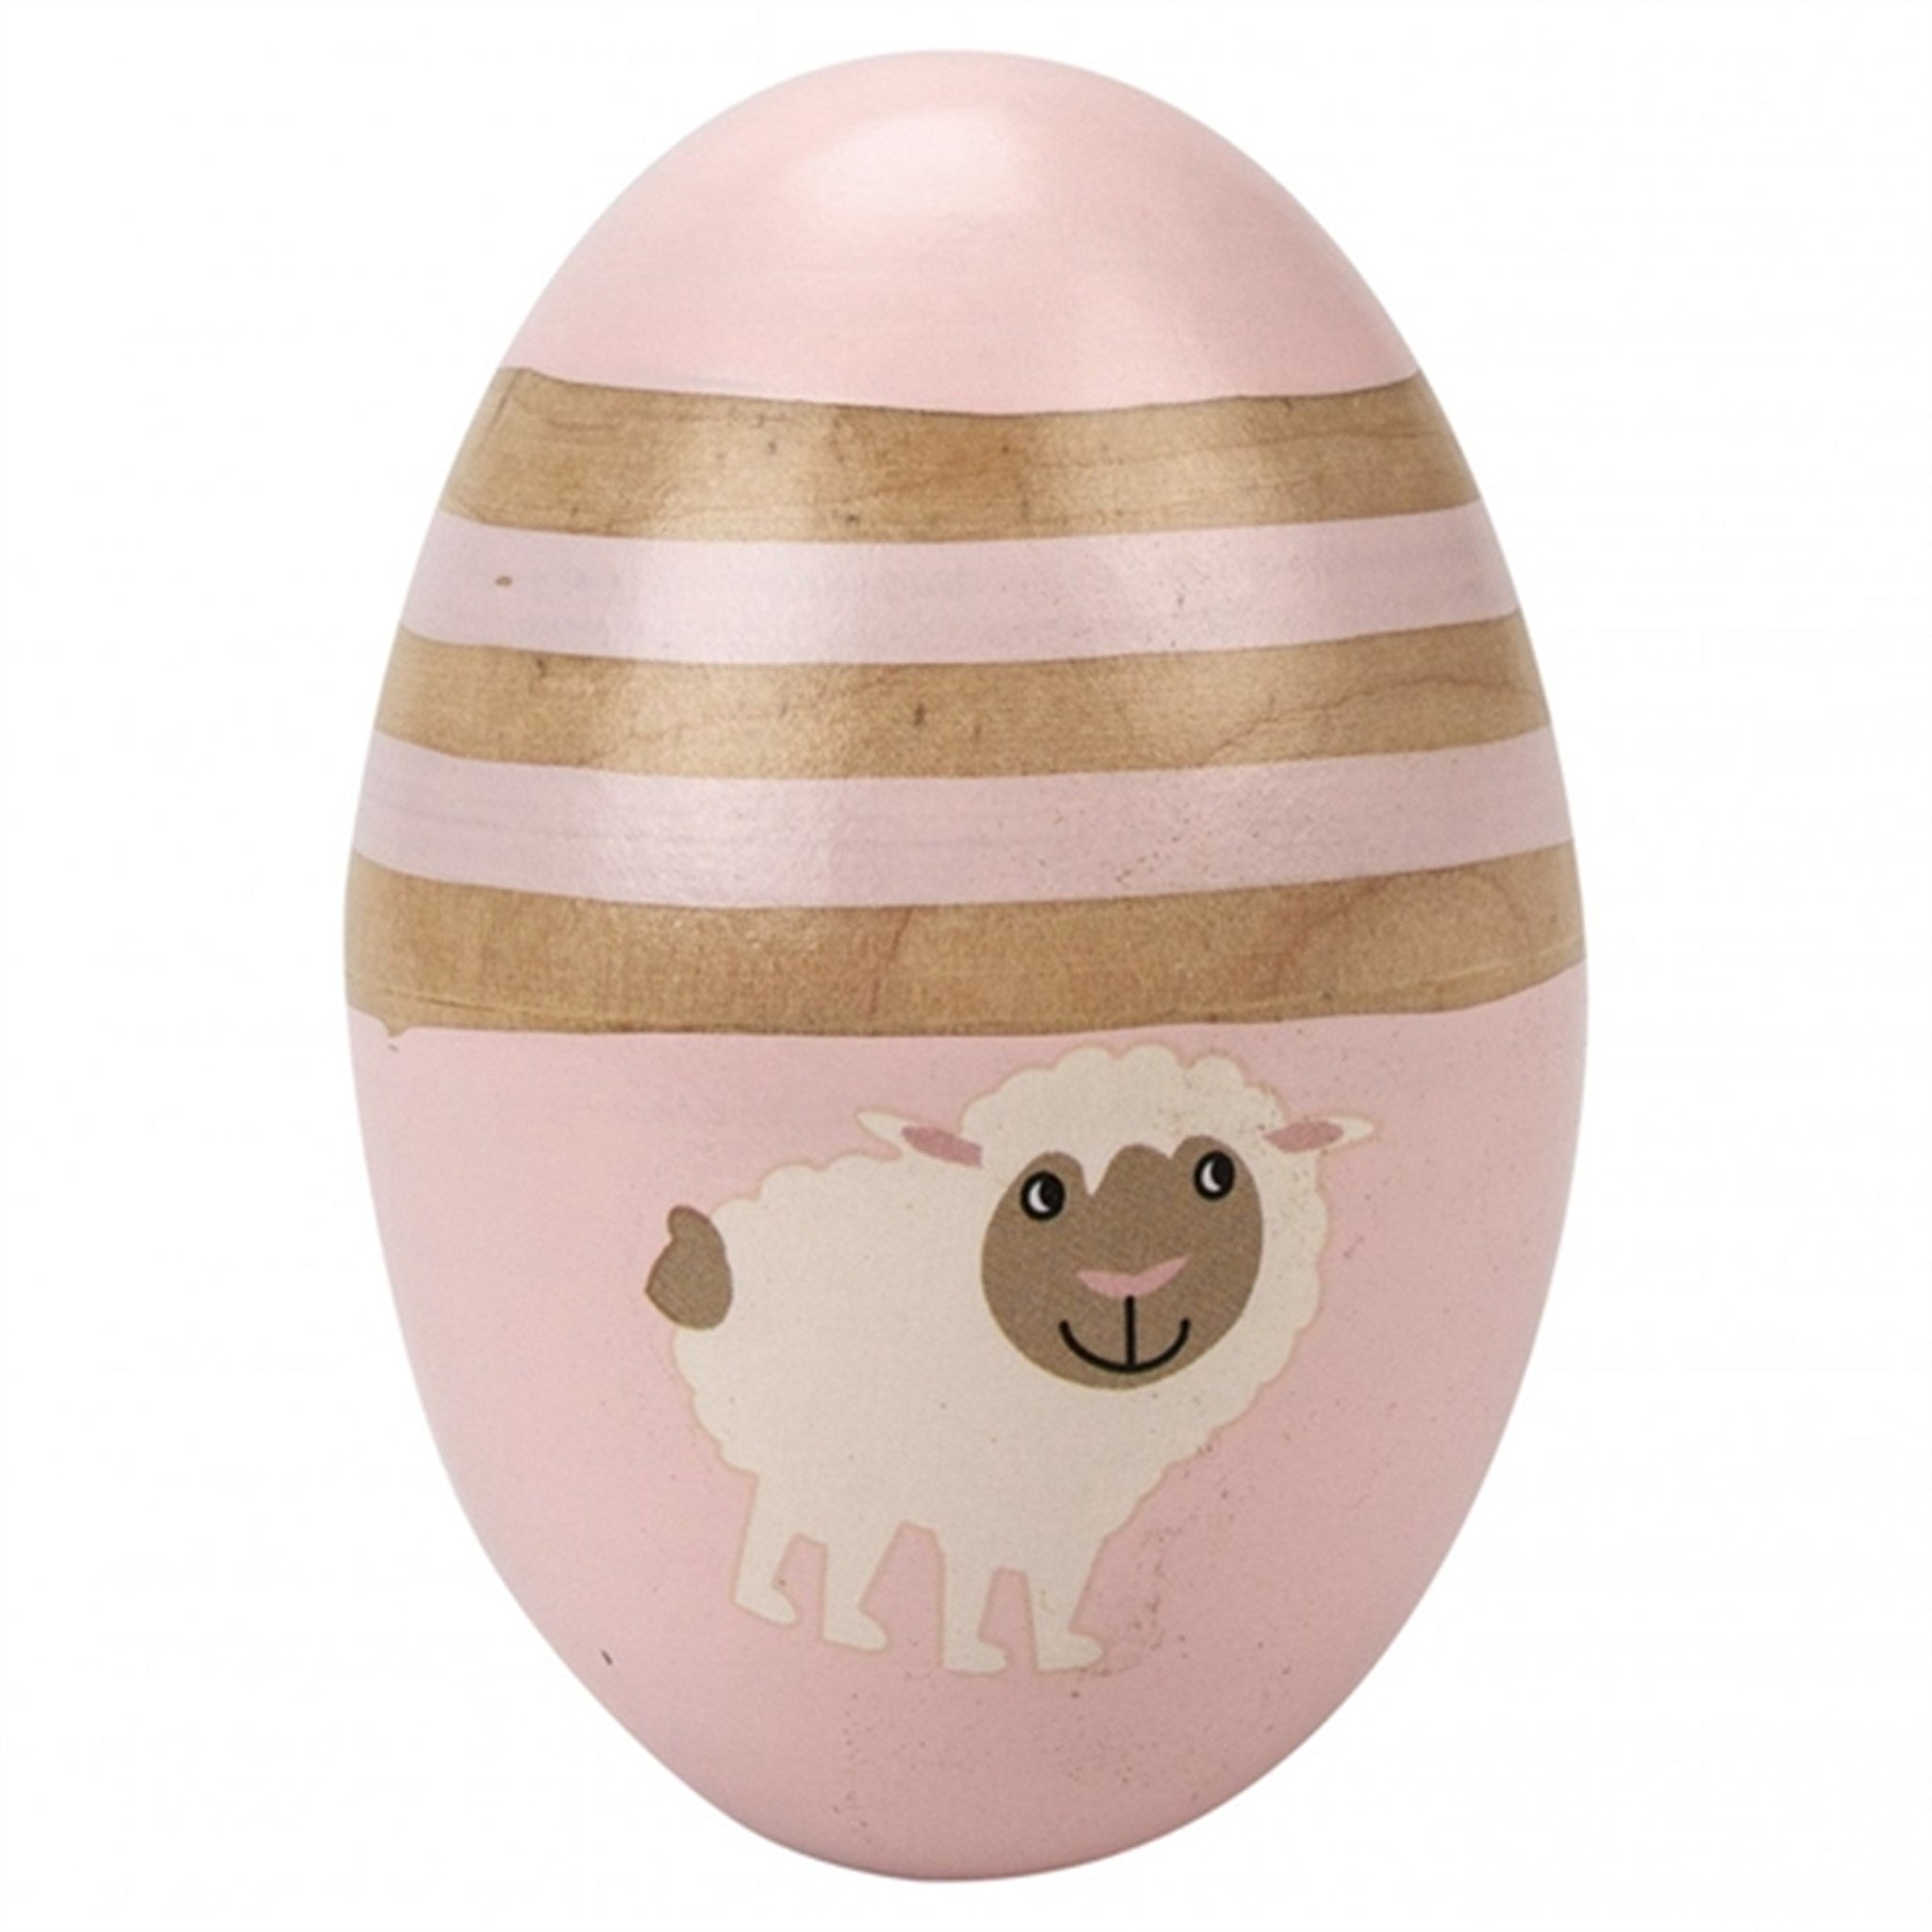 Magni Noisy Egg Pink - Sheep